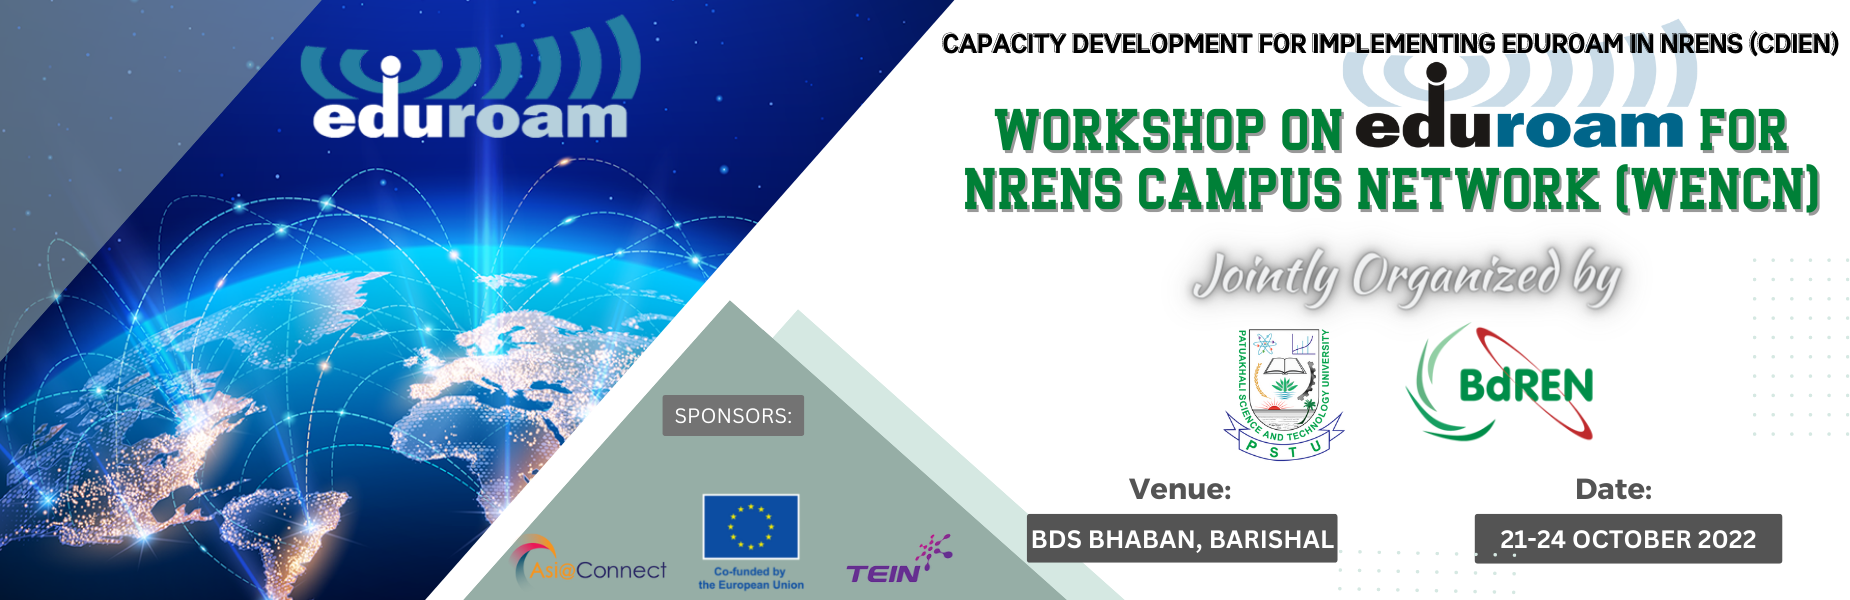 Workshop on Eduroam for NRENs Campus Network (WENCN)